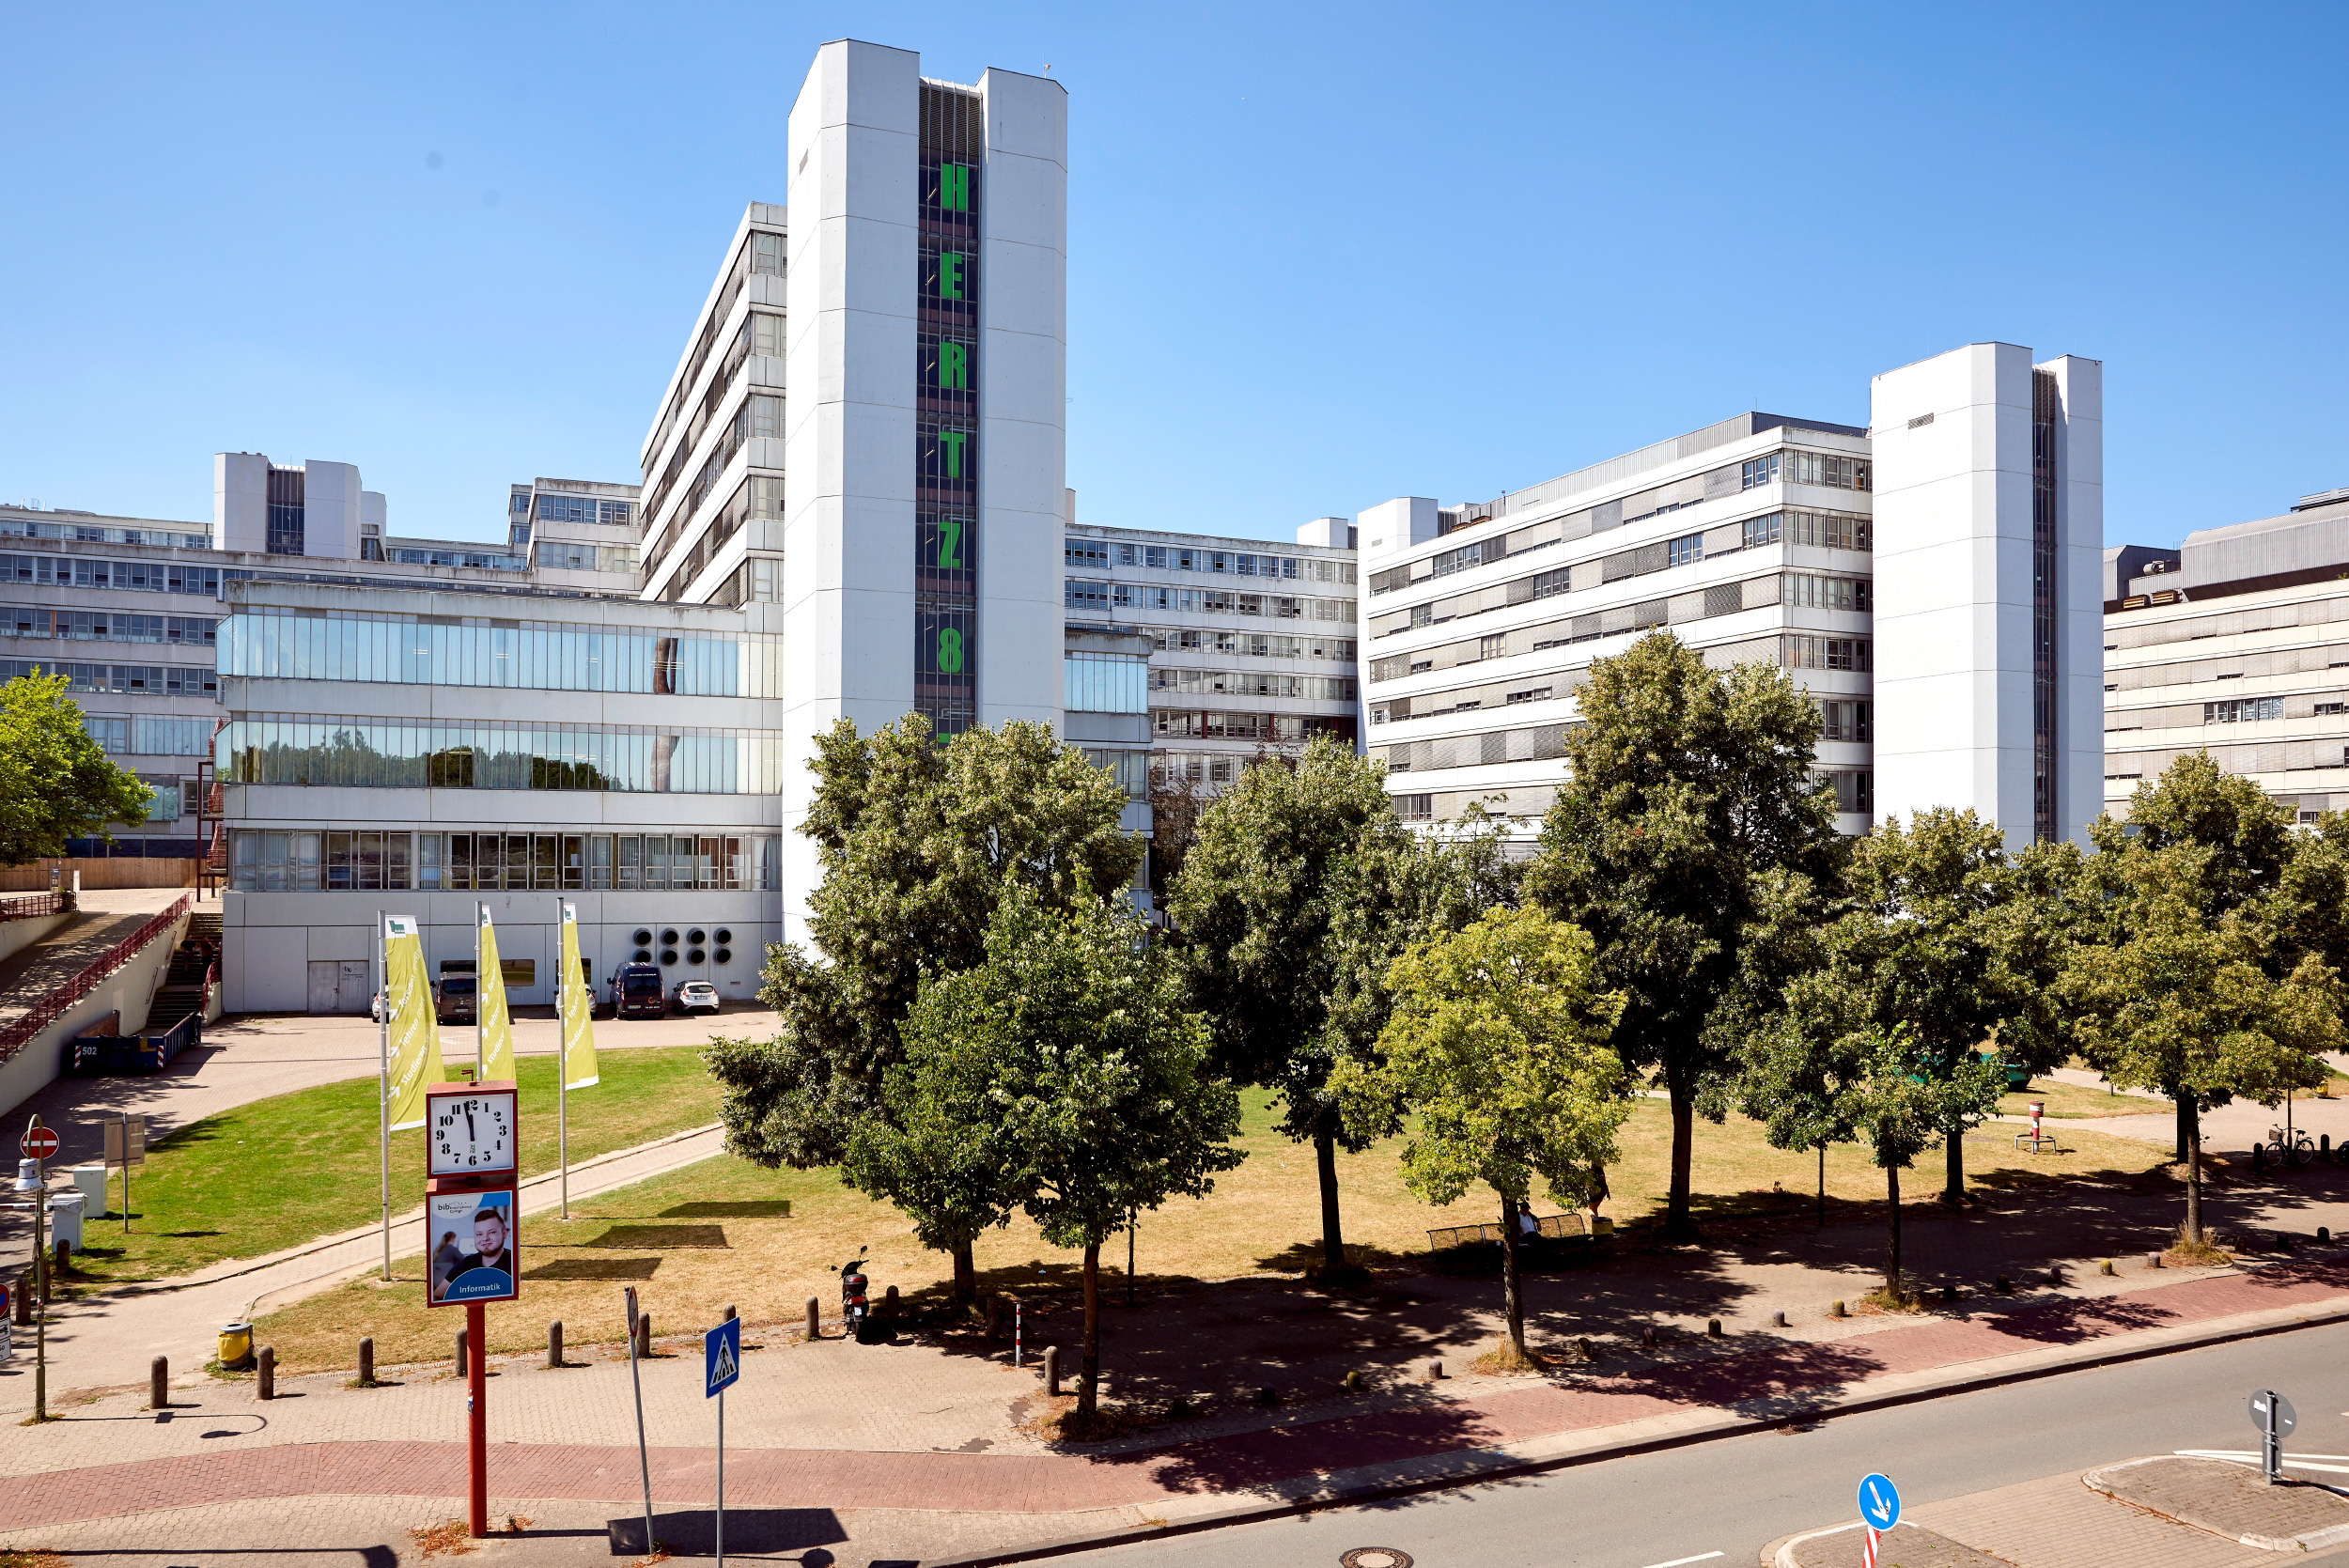 image of Uni Bielefeld campus and buildings